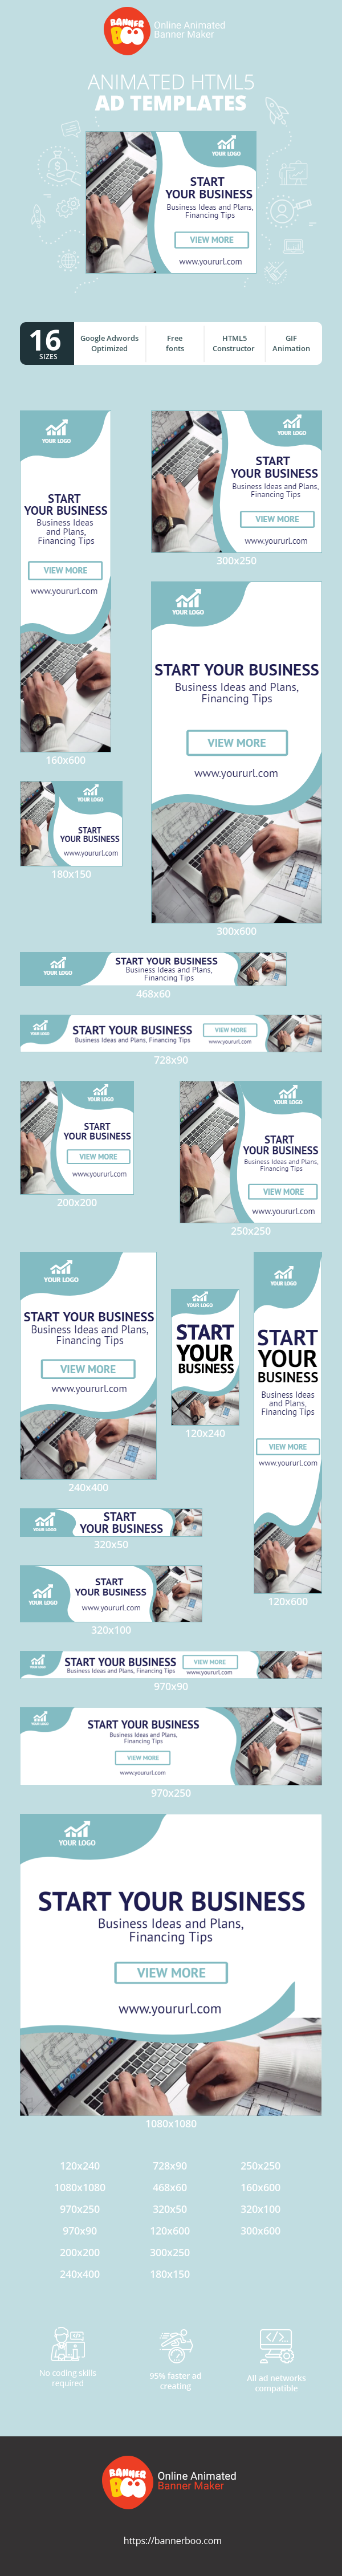 Шаблон рекламного банера — Start Your Business — Business Ideas and Plans